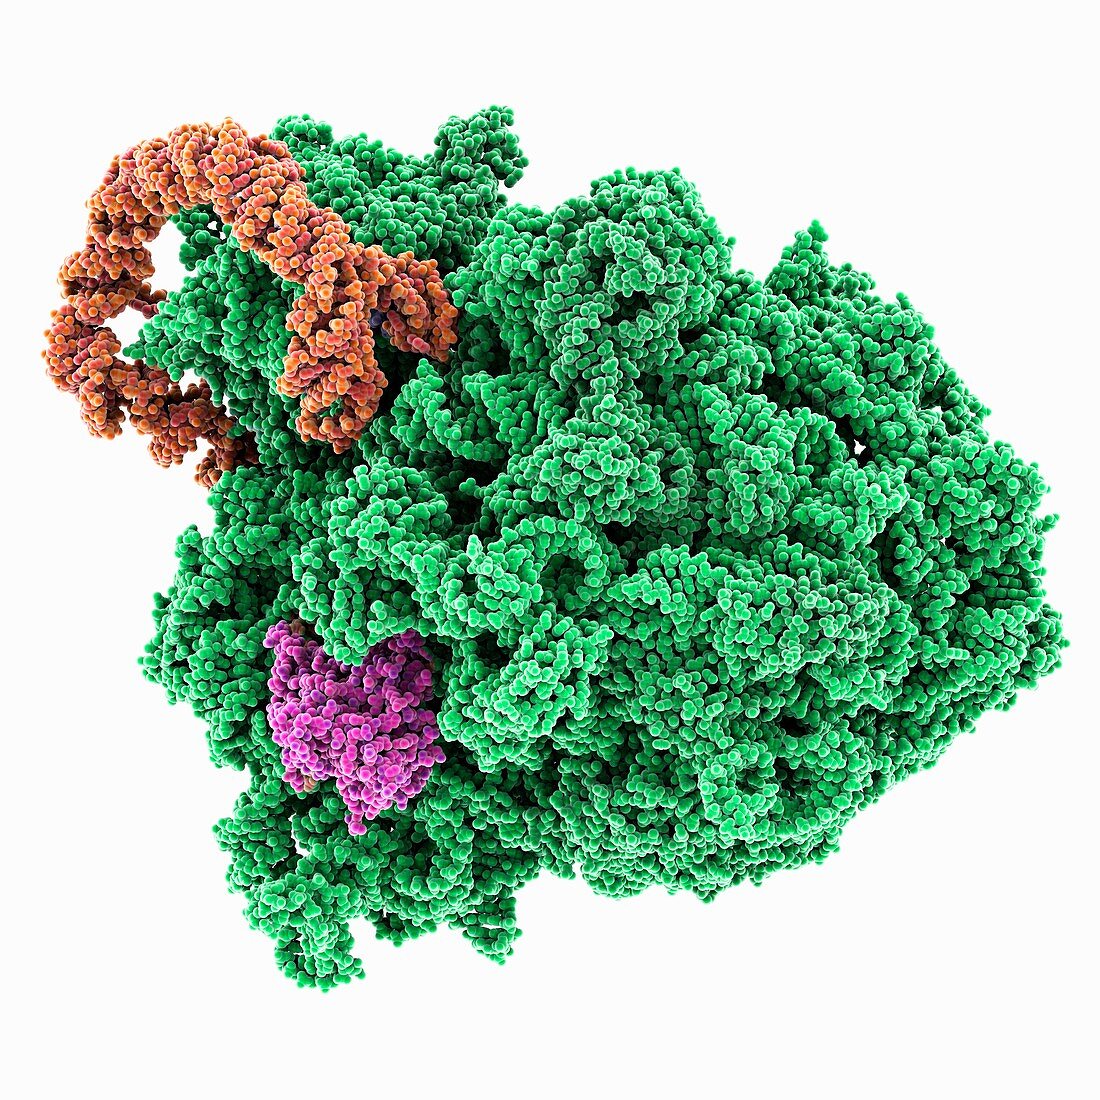 Ribosomal RNA complex